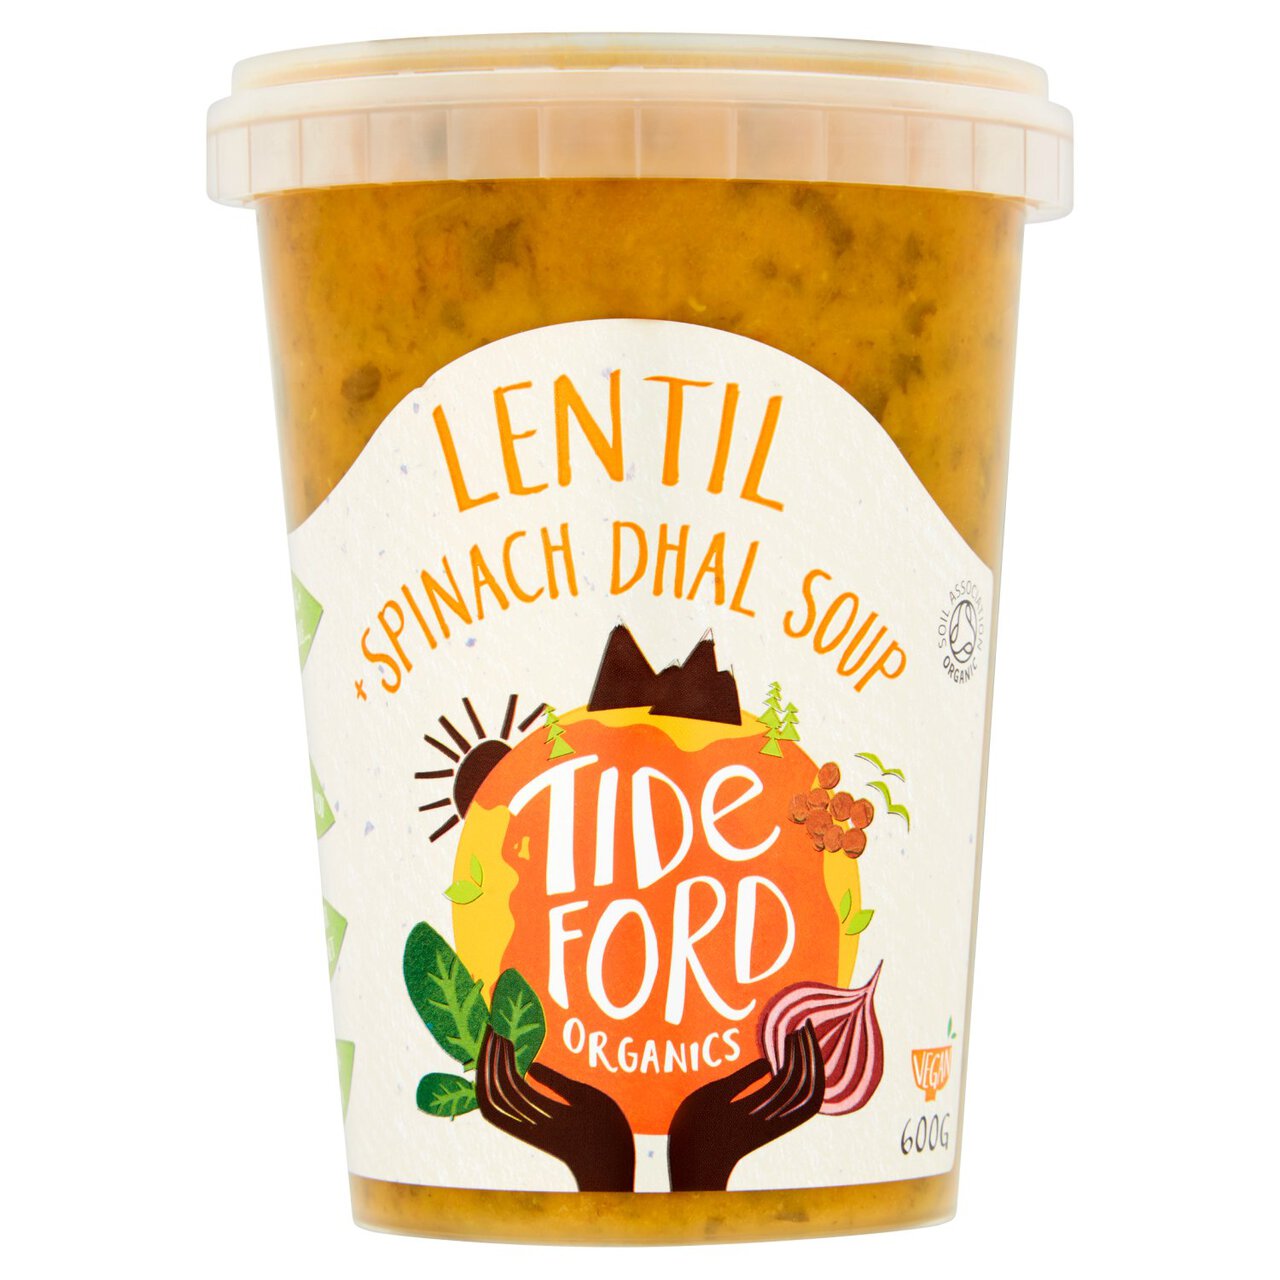 Tideford Organic Lentil & Spinach Dhal Soup 600g